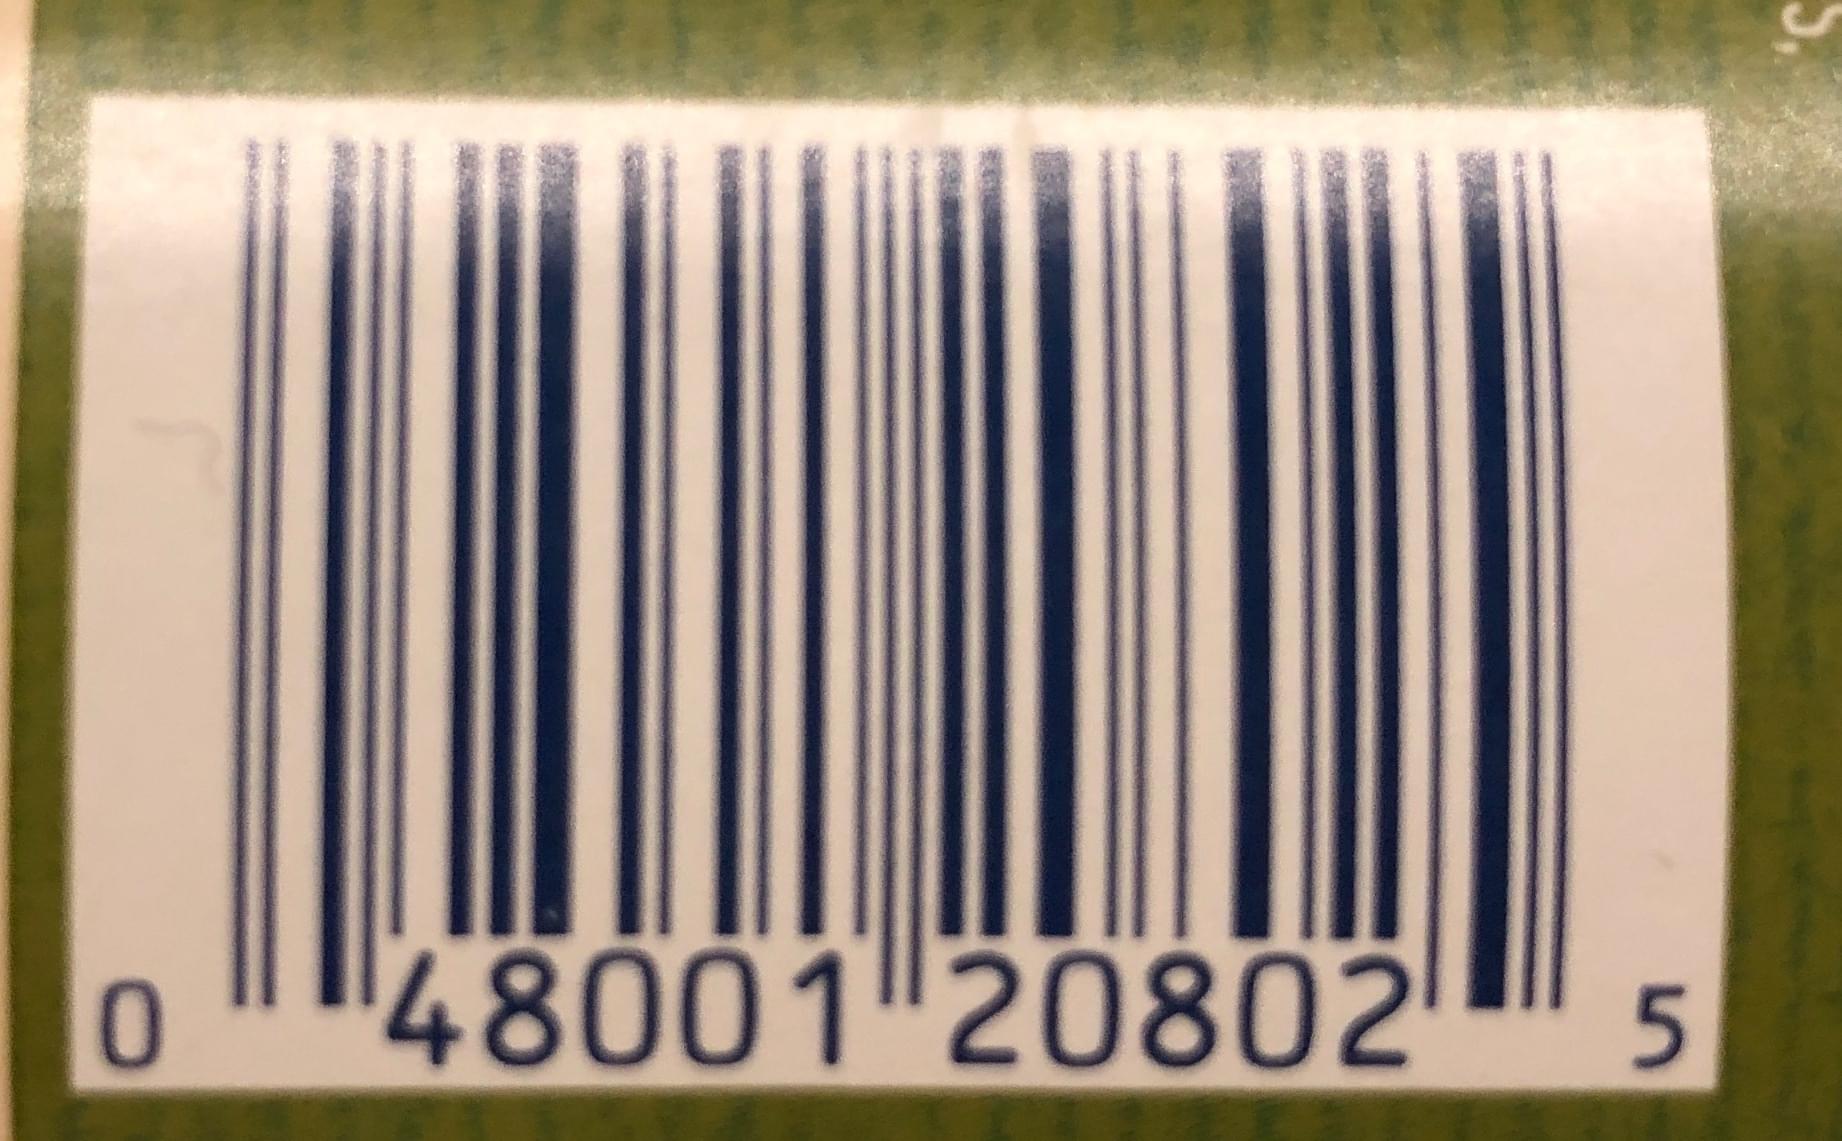 A twelve digit product code.